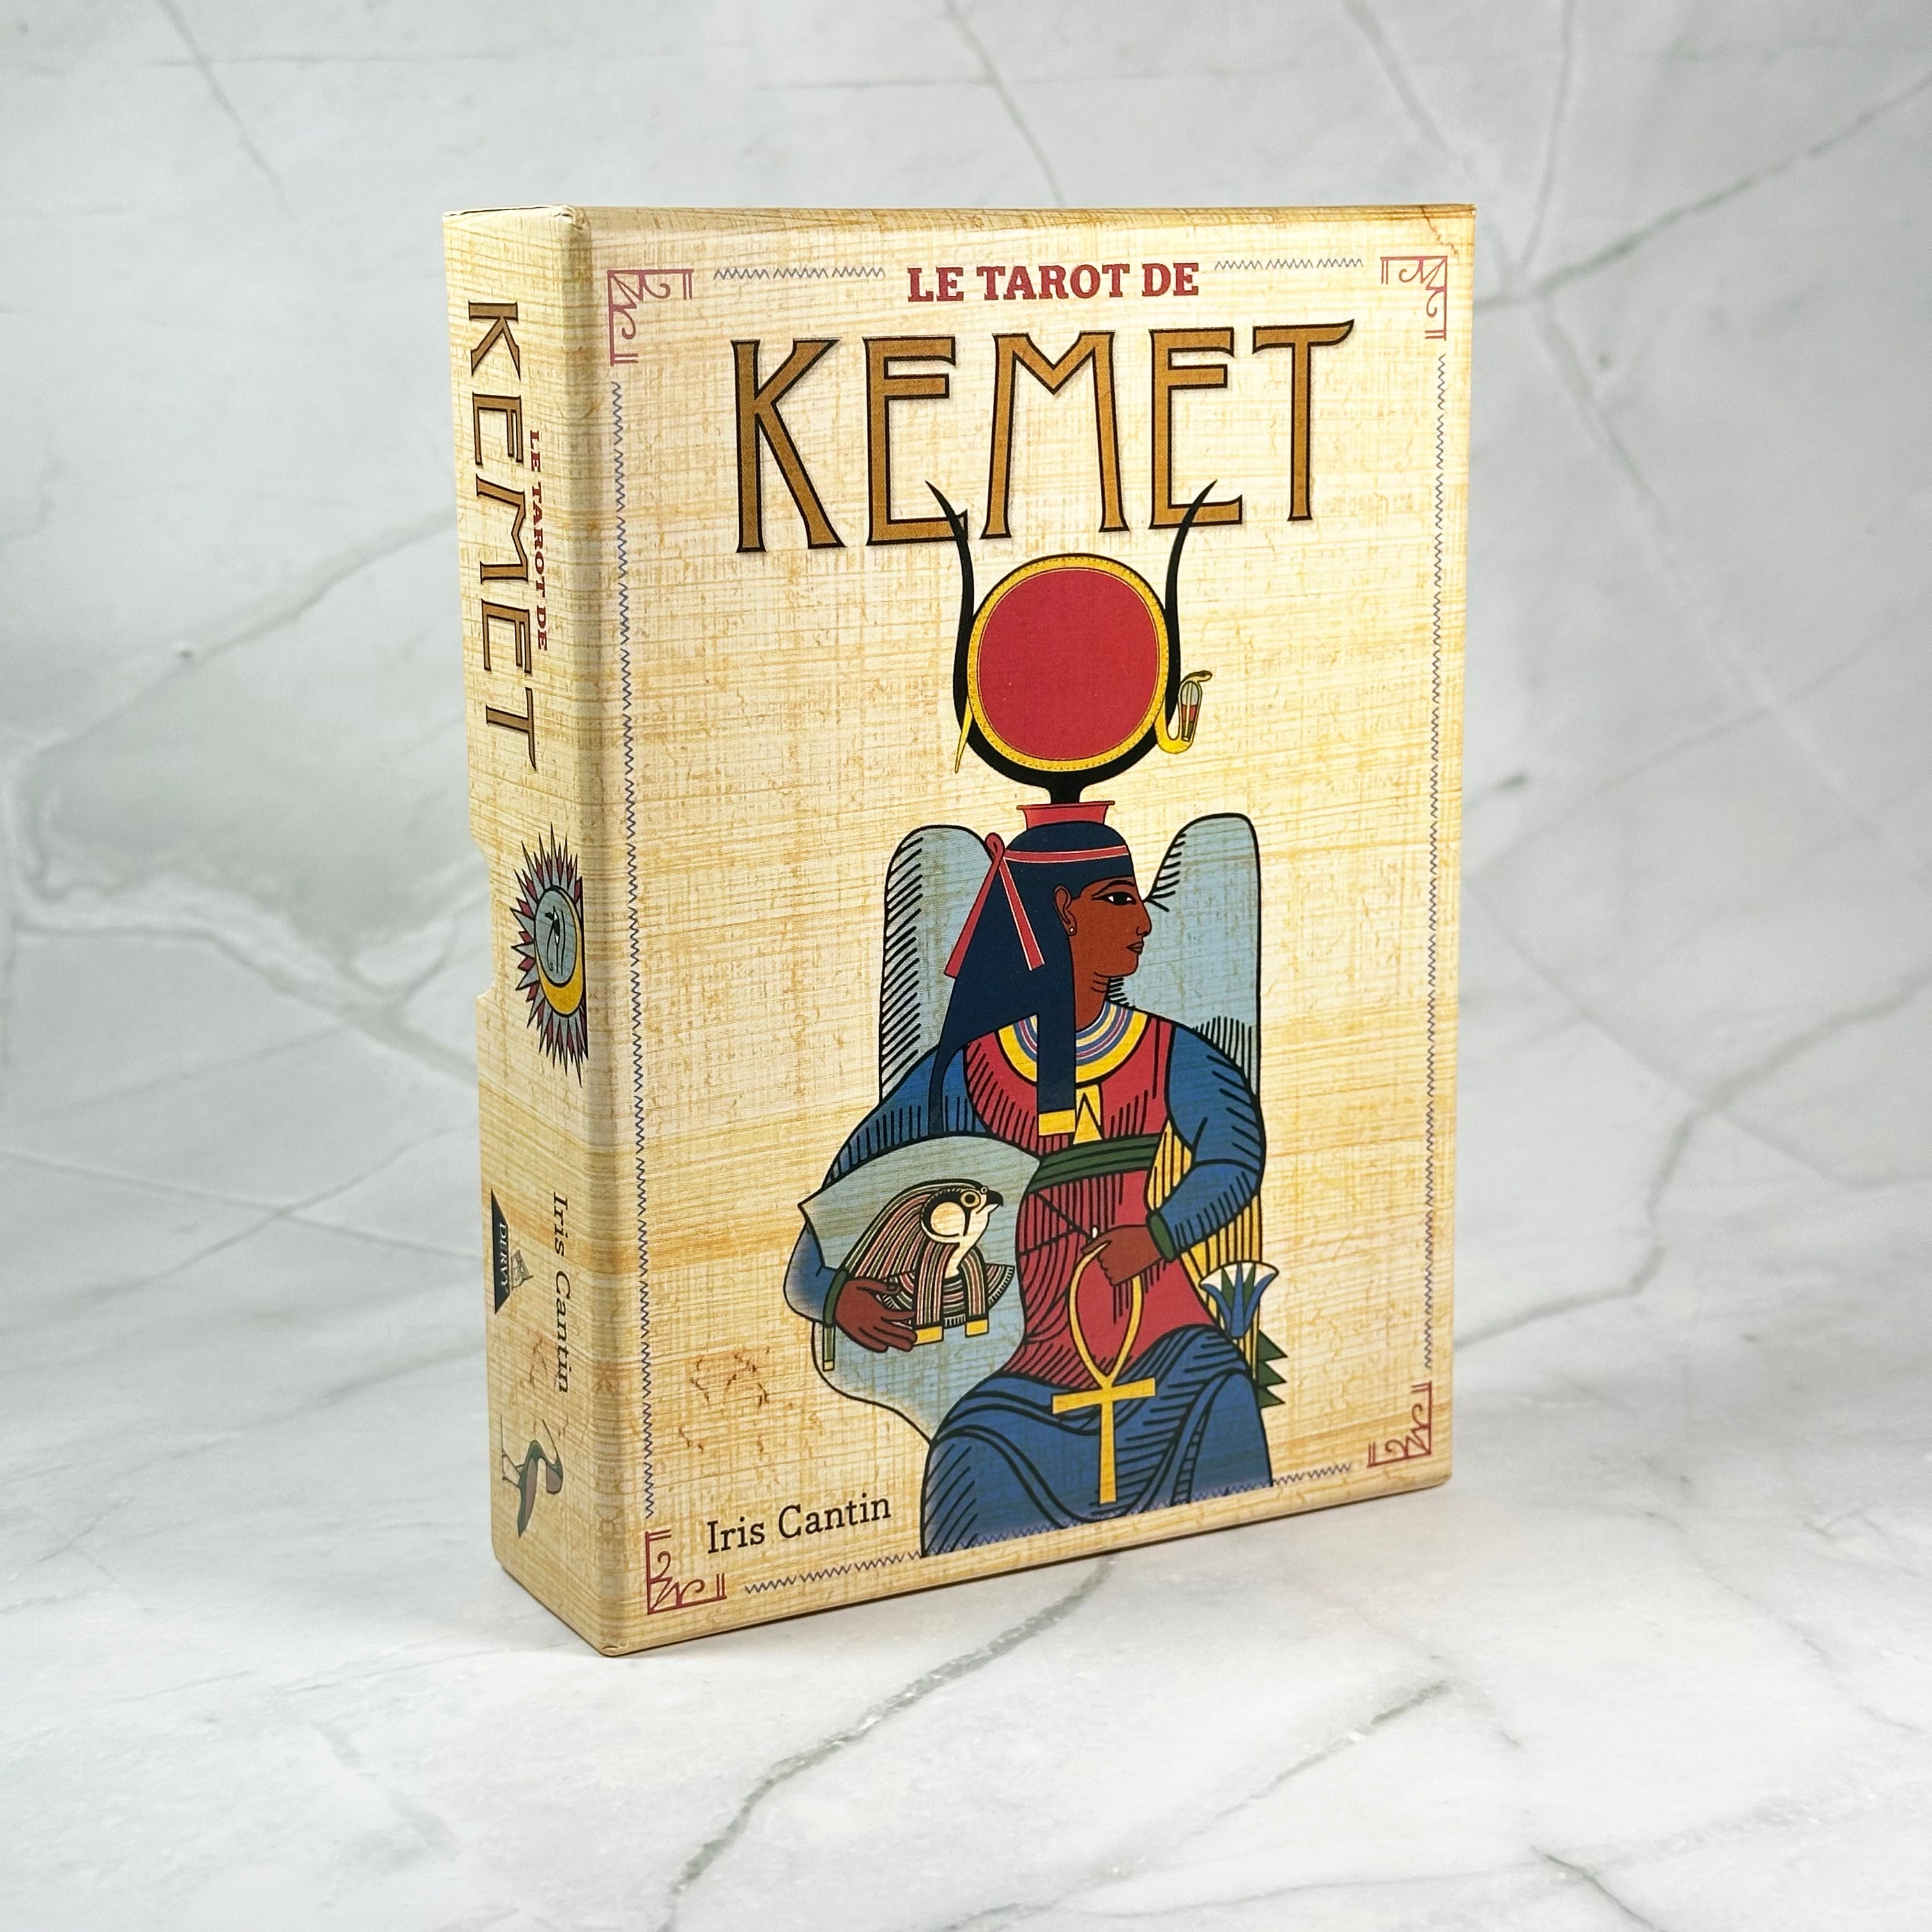 Le Tarot de Kemet